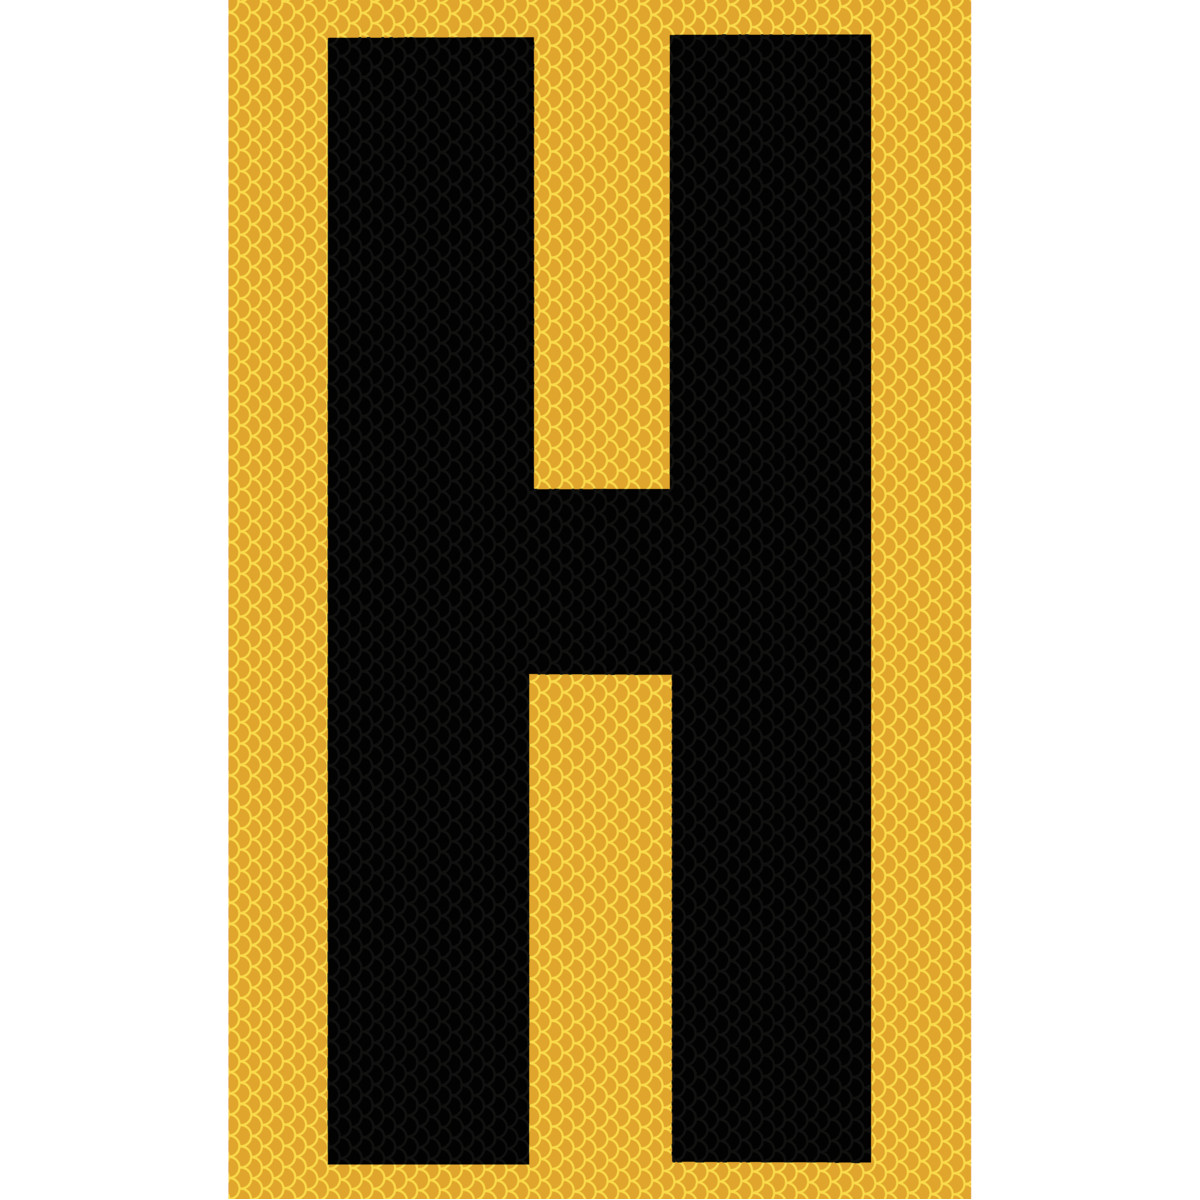 3" Black on Yellow High Intensity Reflective "H"